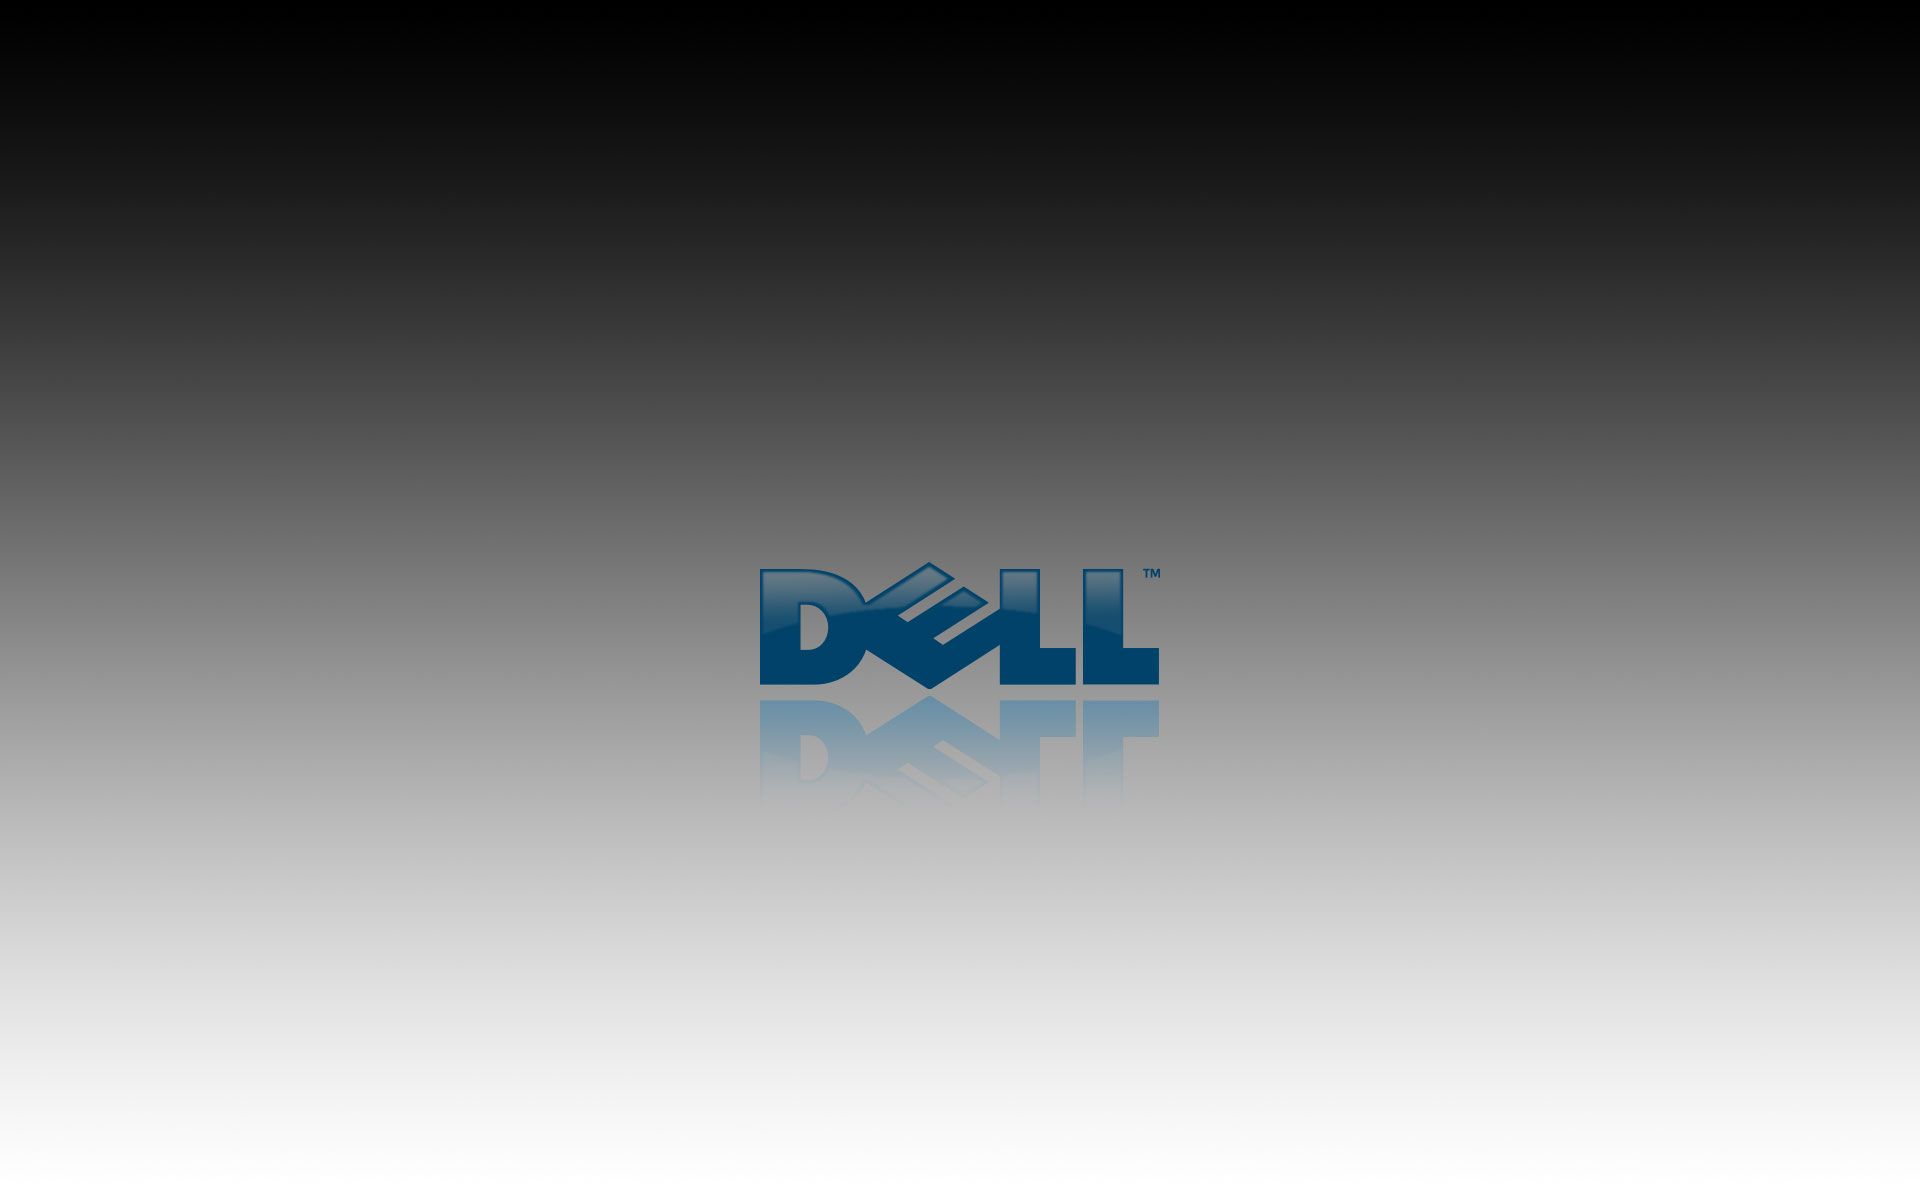 Dell HD Wallpaper